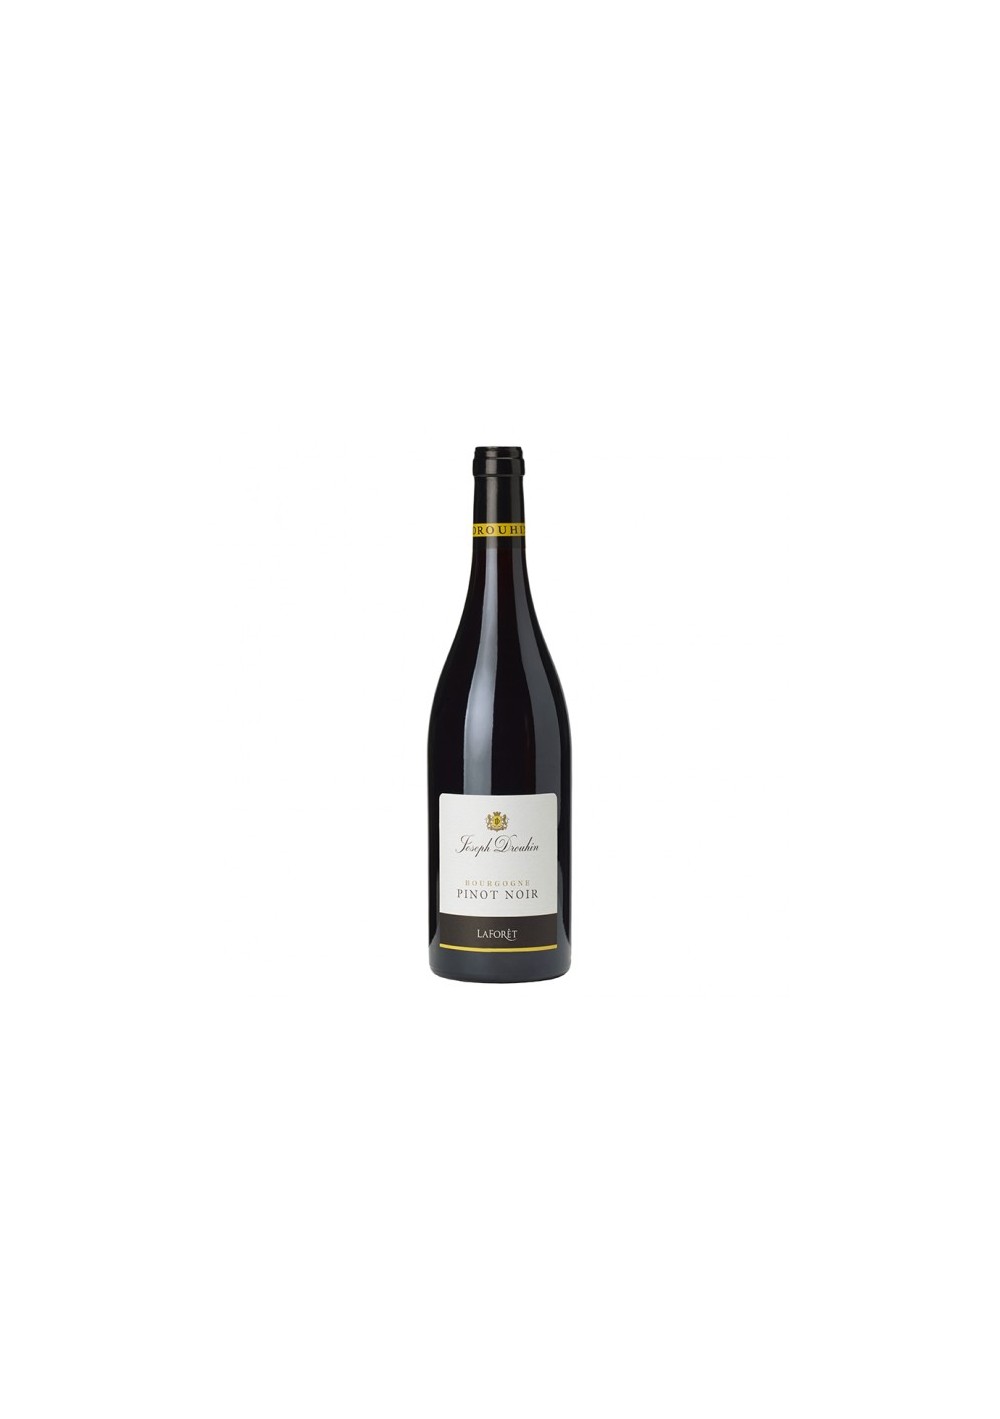 Bourgogne Pinot Noir Laforêt 2016 - Joseph Drouhin